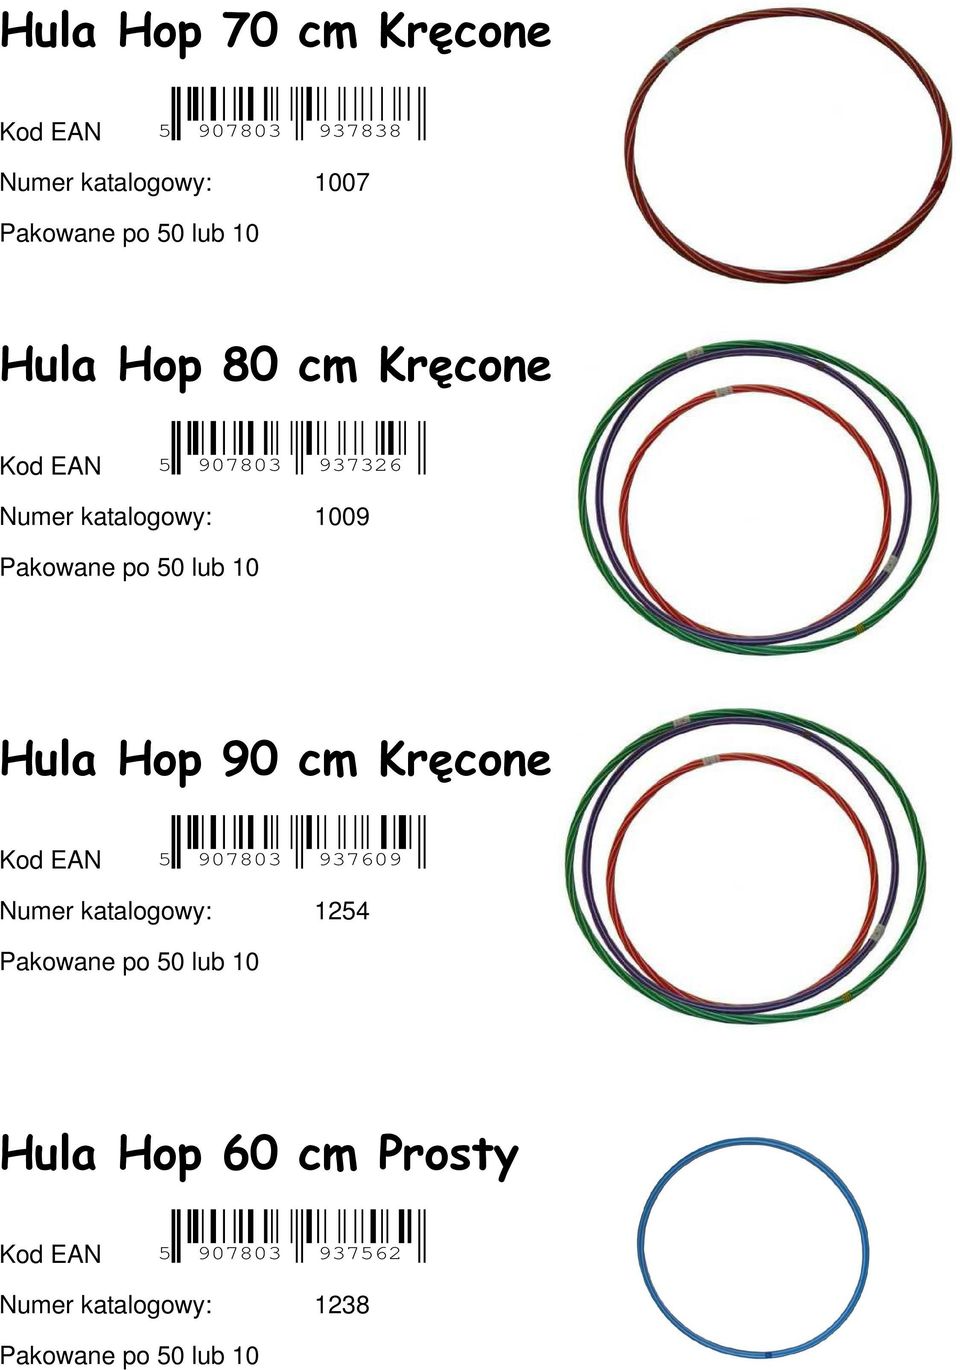 Hula Hop 90 cm Kręcone Kod EAN 5 907803 937609 Numer katalogowy: 1254 Pakowane po 50 lub 10